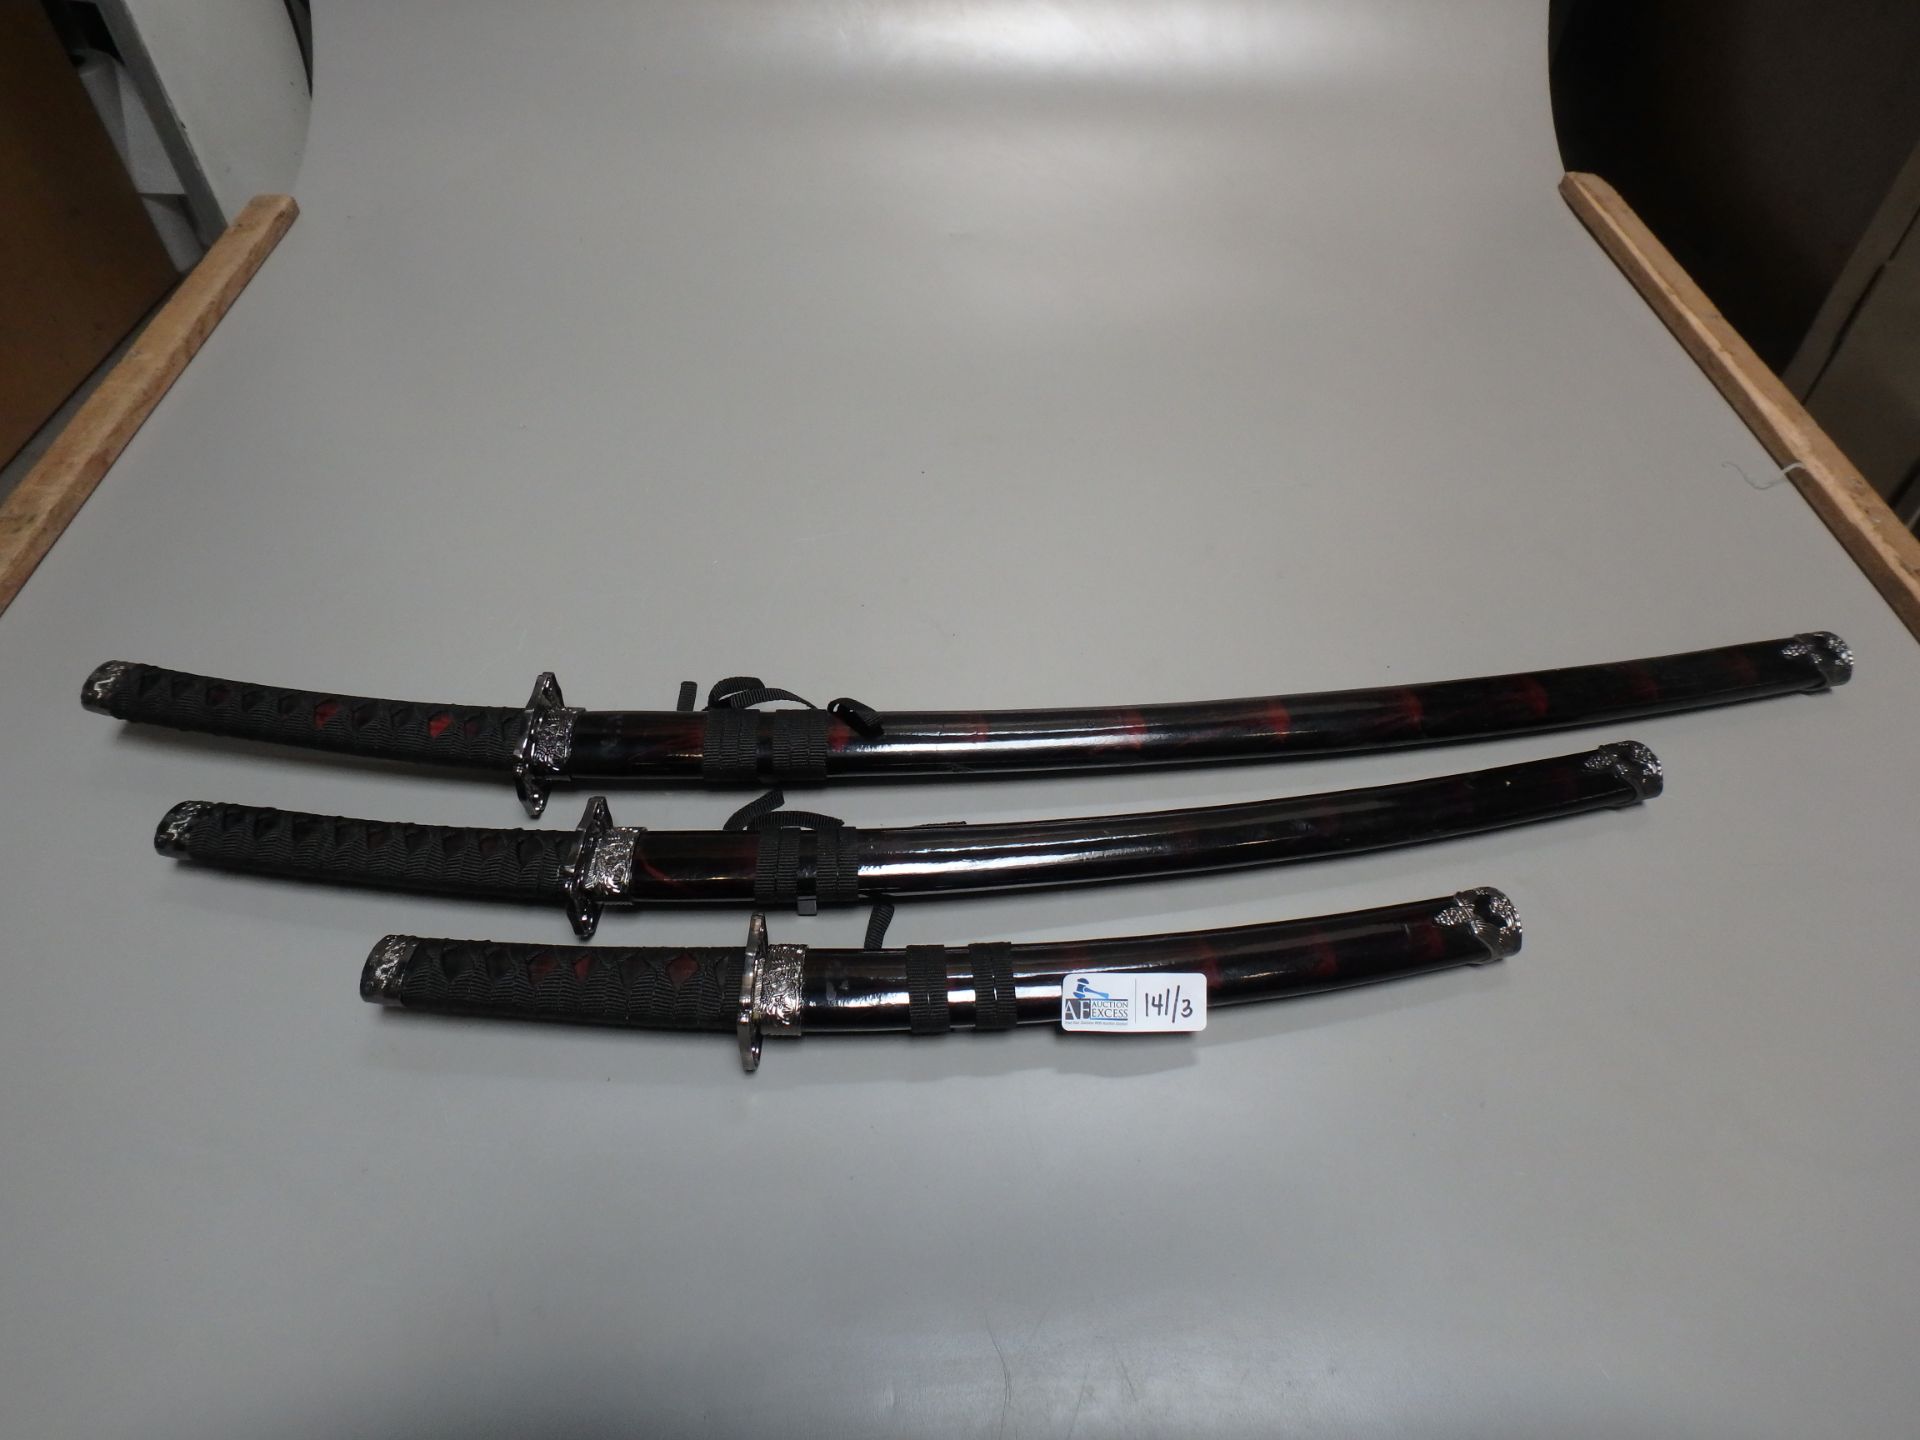 LOT OF 3 SAMURAI STYLE SWORDS - Image 2 of 2